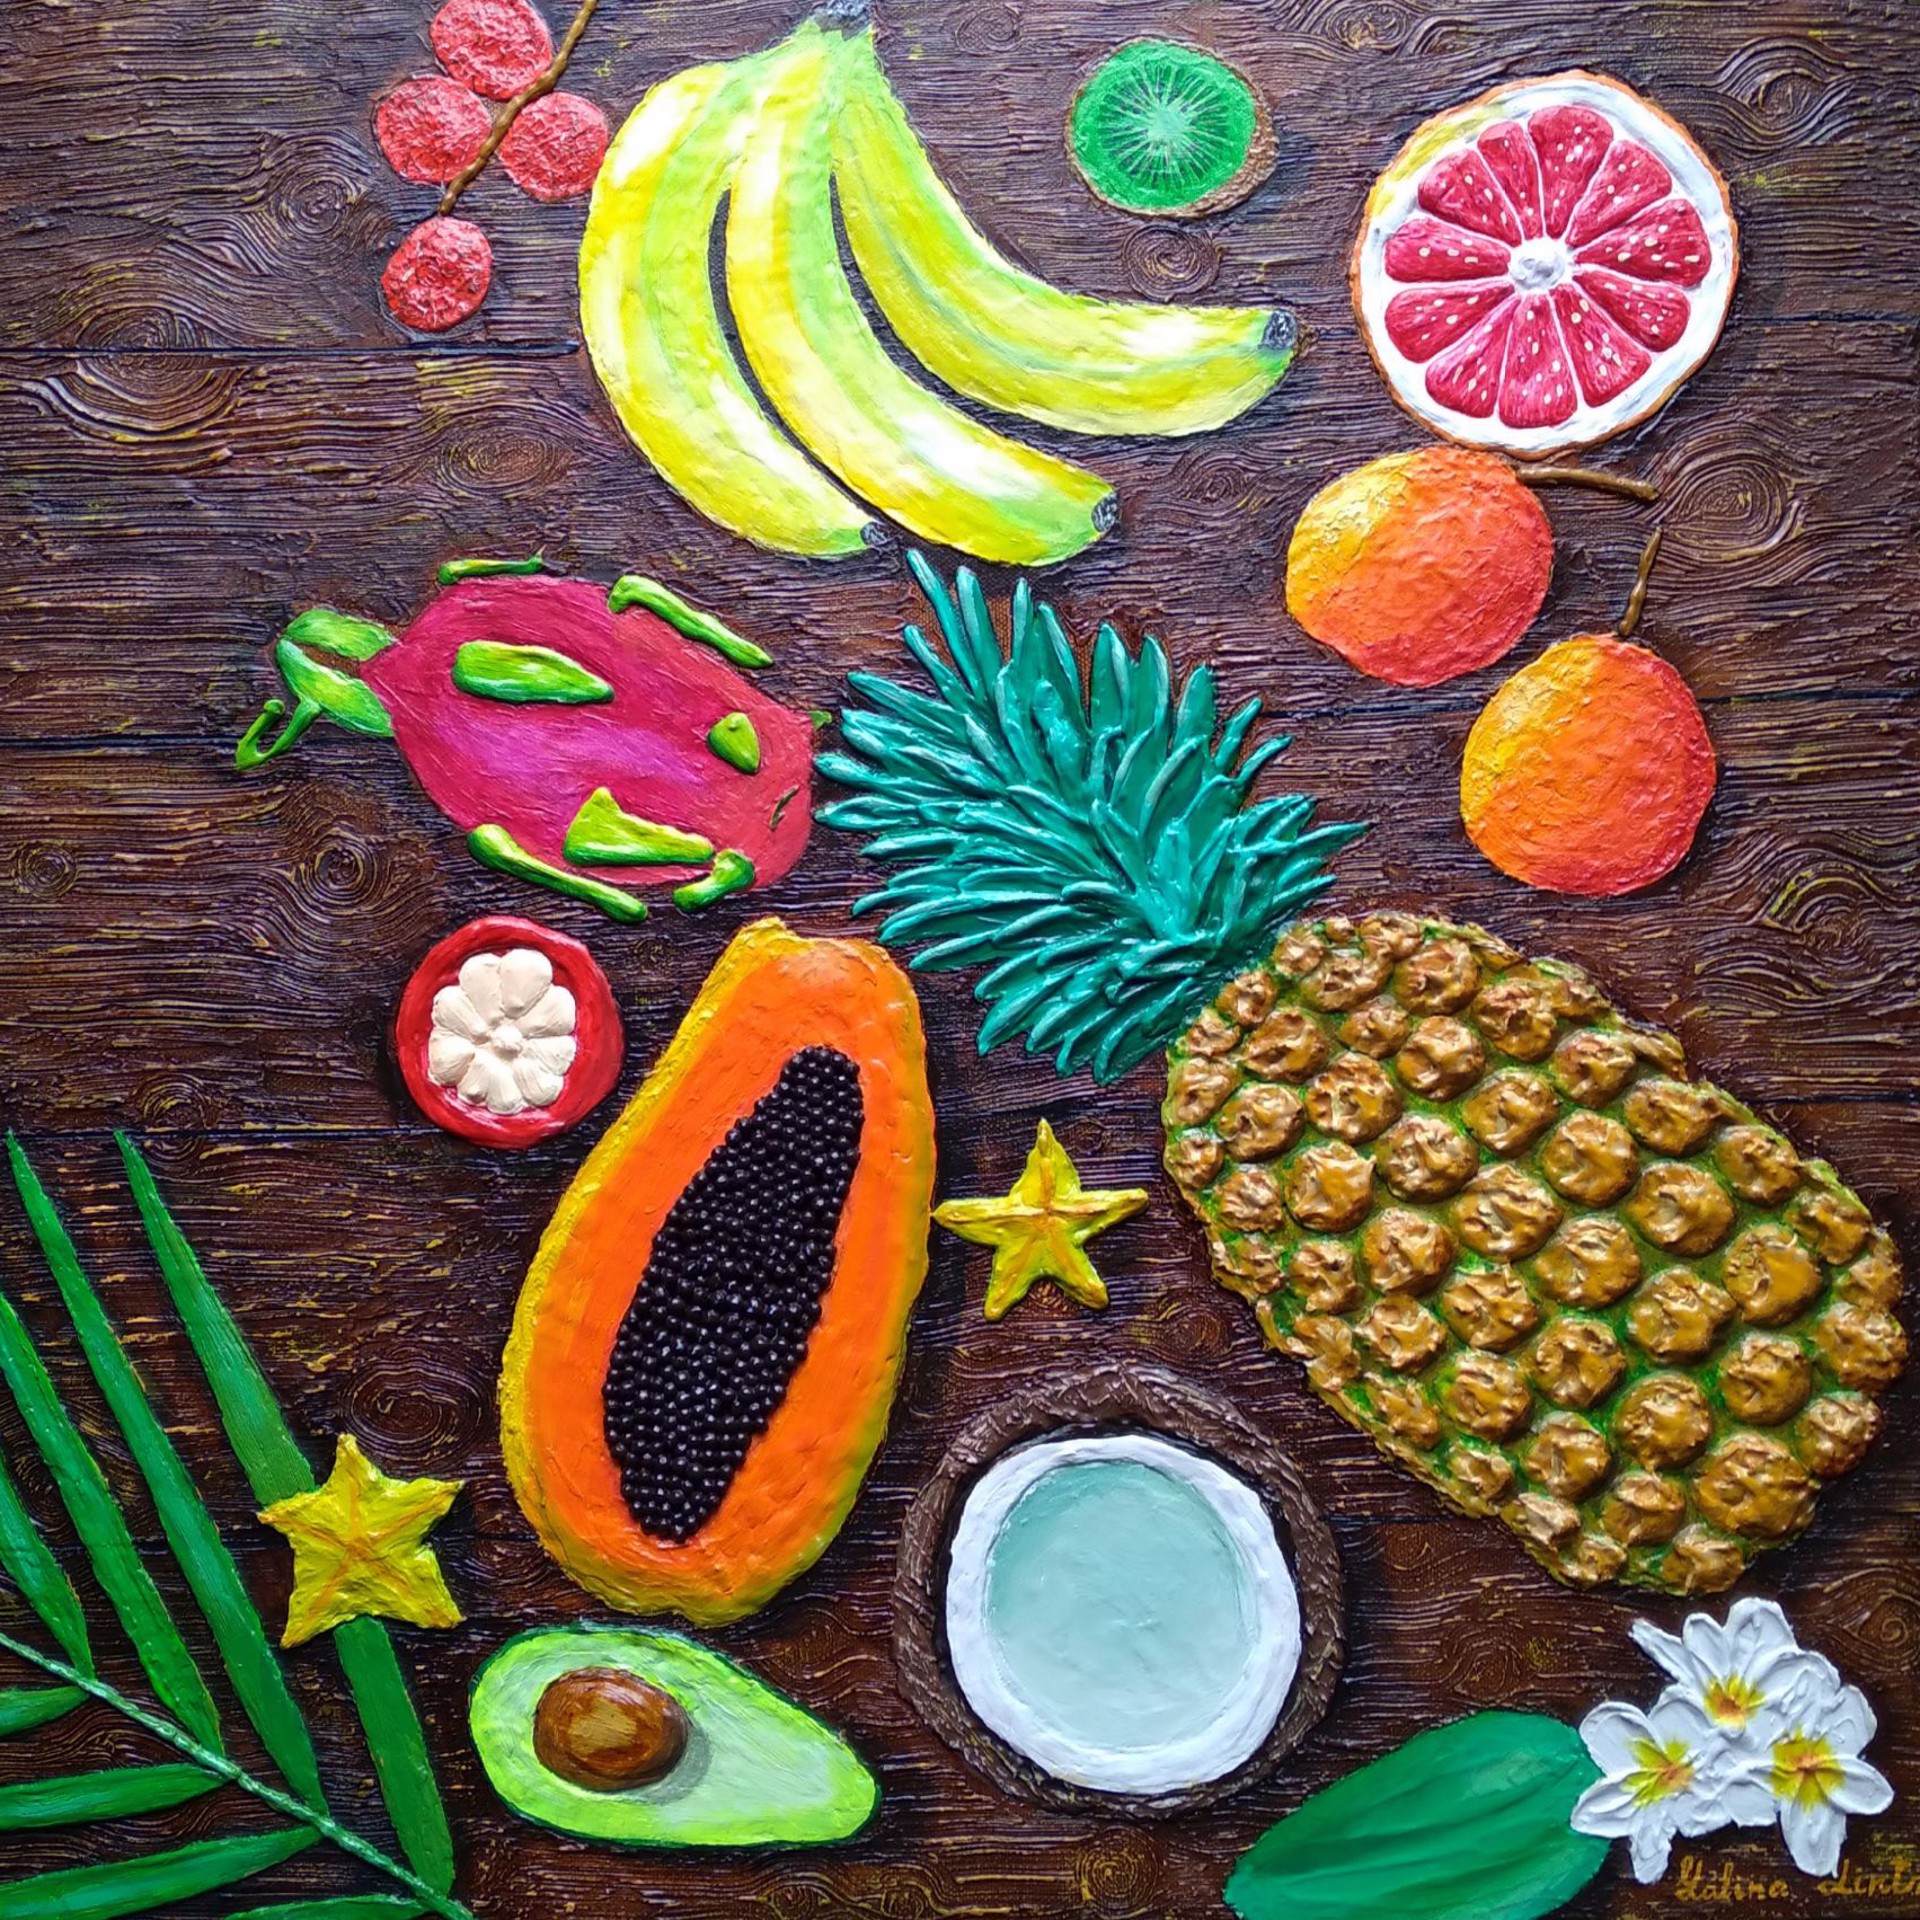 Tropical Fruits by Galina Lintz